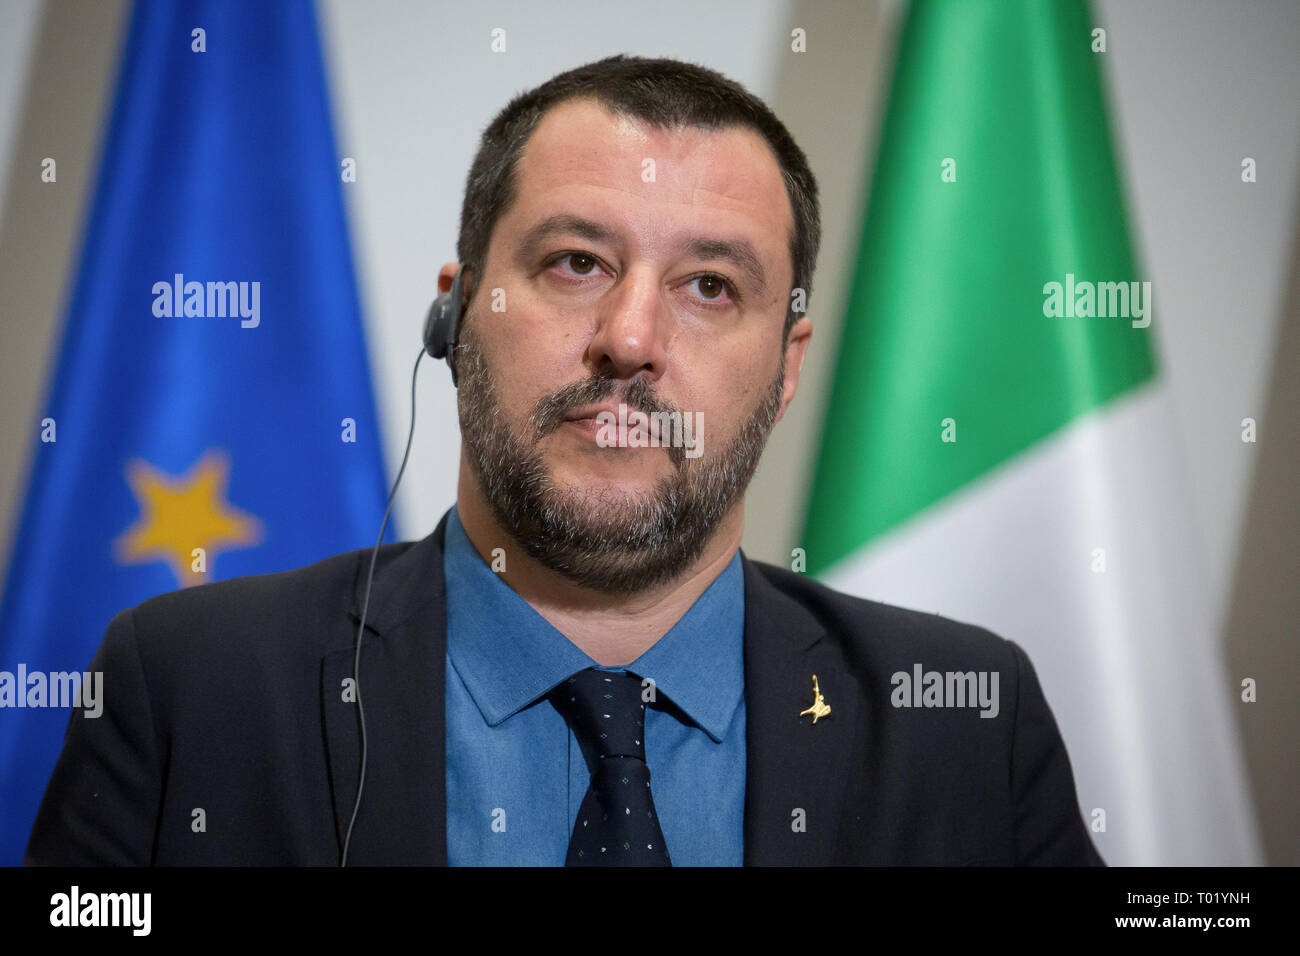 El Viceprimer Ministro italiano Matteo Salvini durante la conferencia de prensa con el Ministro del Interior polaco Joachim Brudzinski al Ministerio del Interior en Varsovia, Polonia, del 9 de enero de 2019 Foto de stock